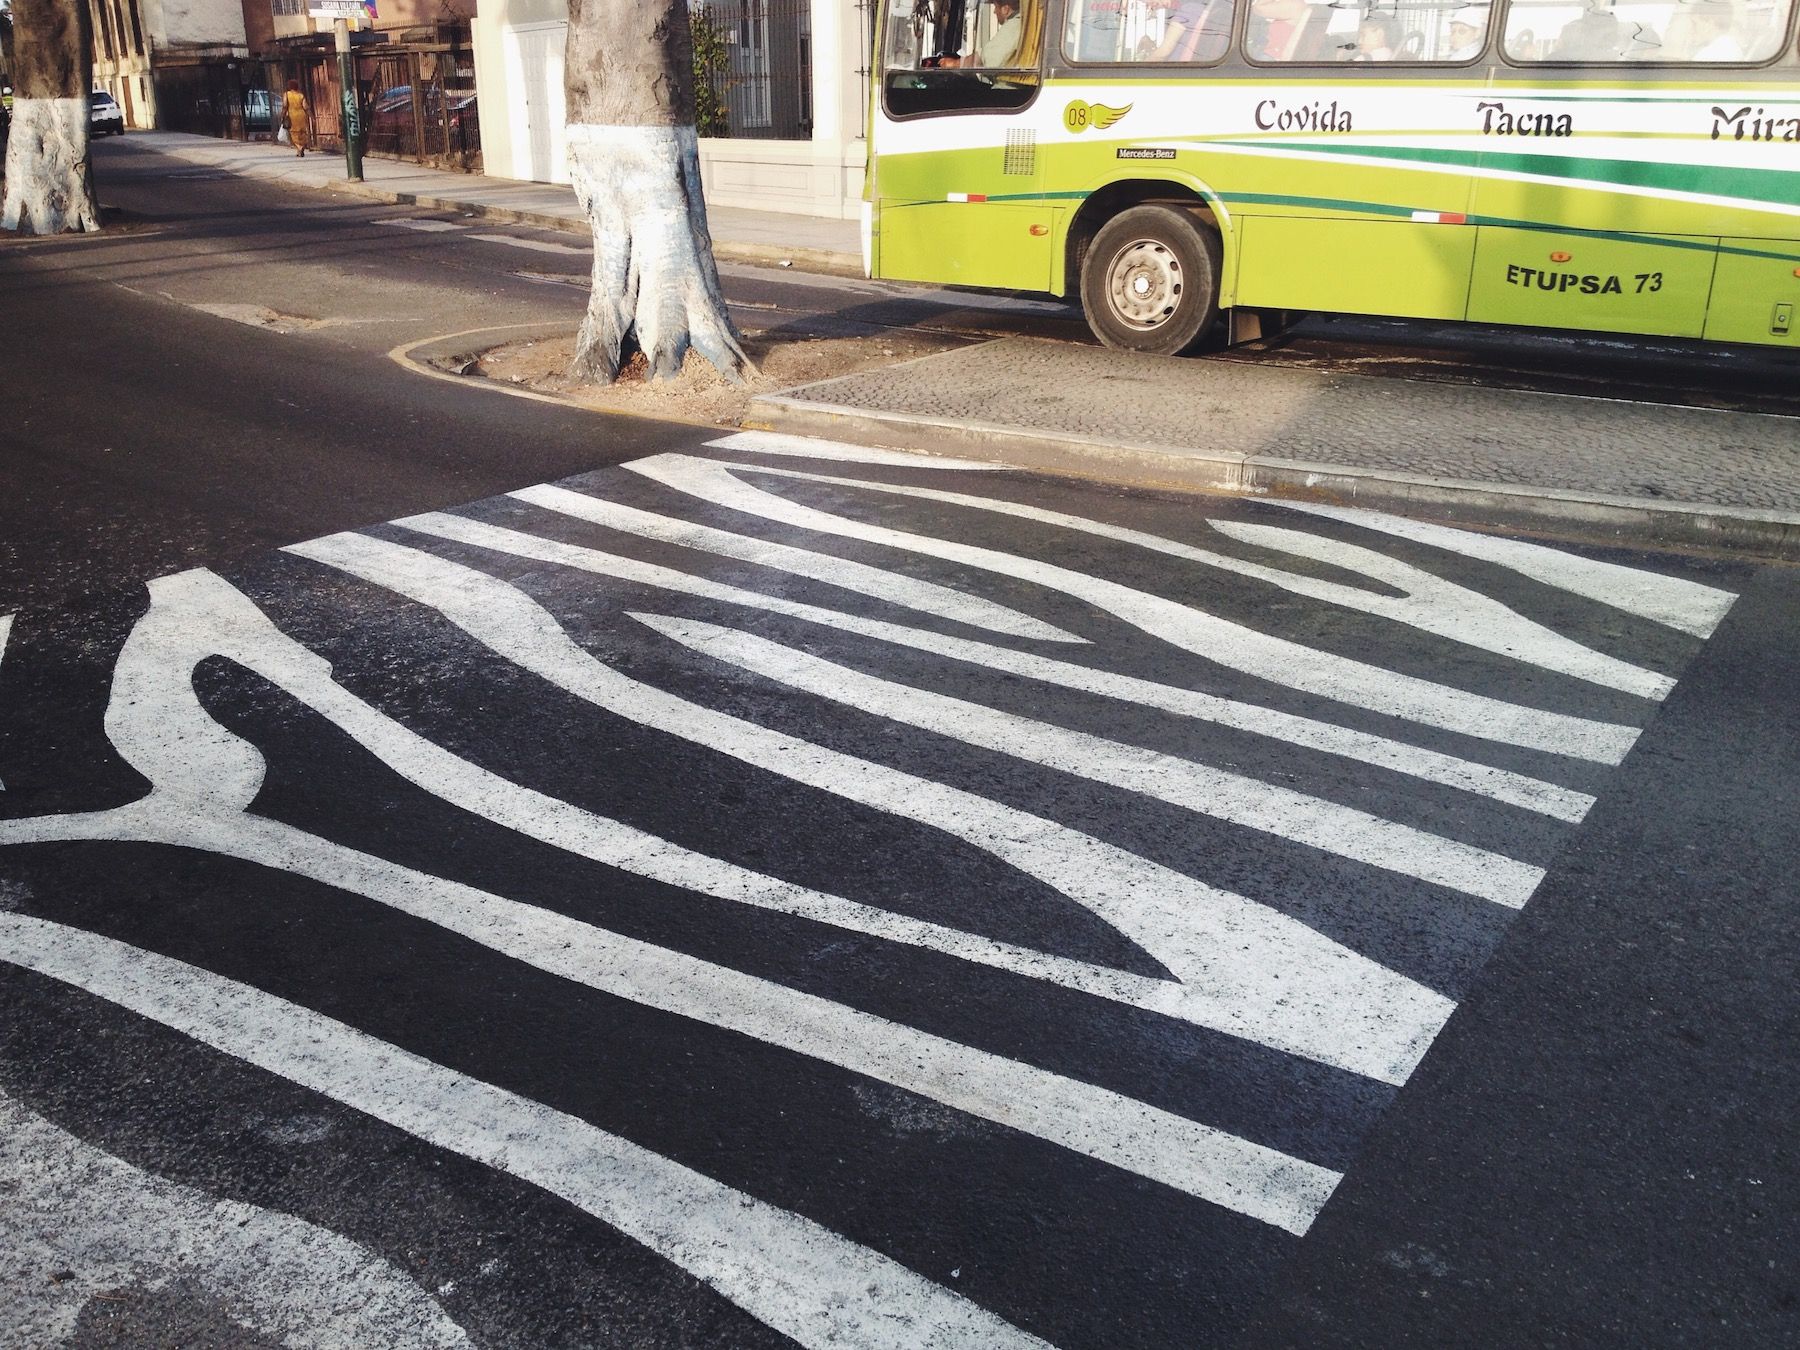 Zebra print cross walk, green bus in background.